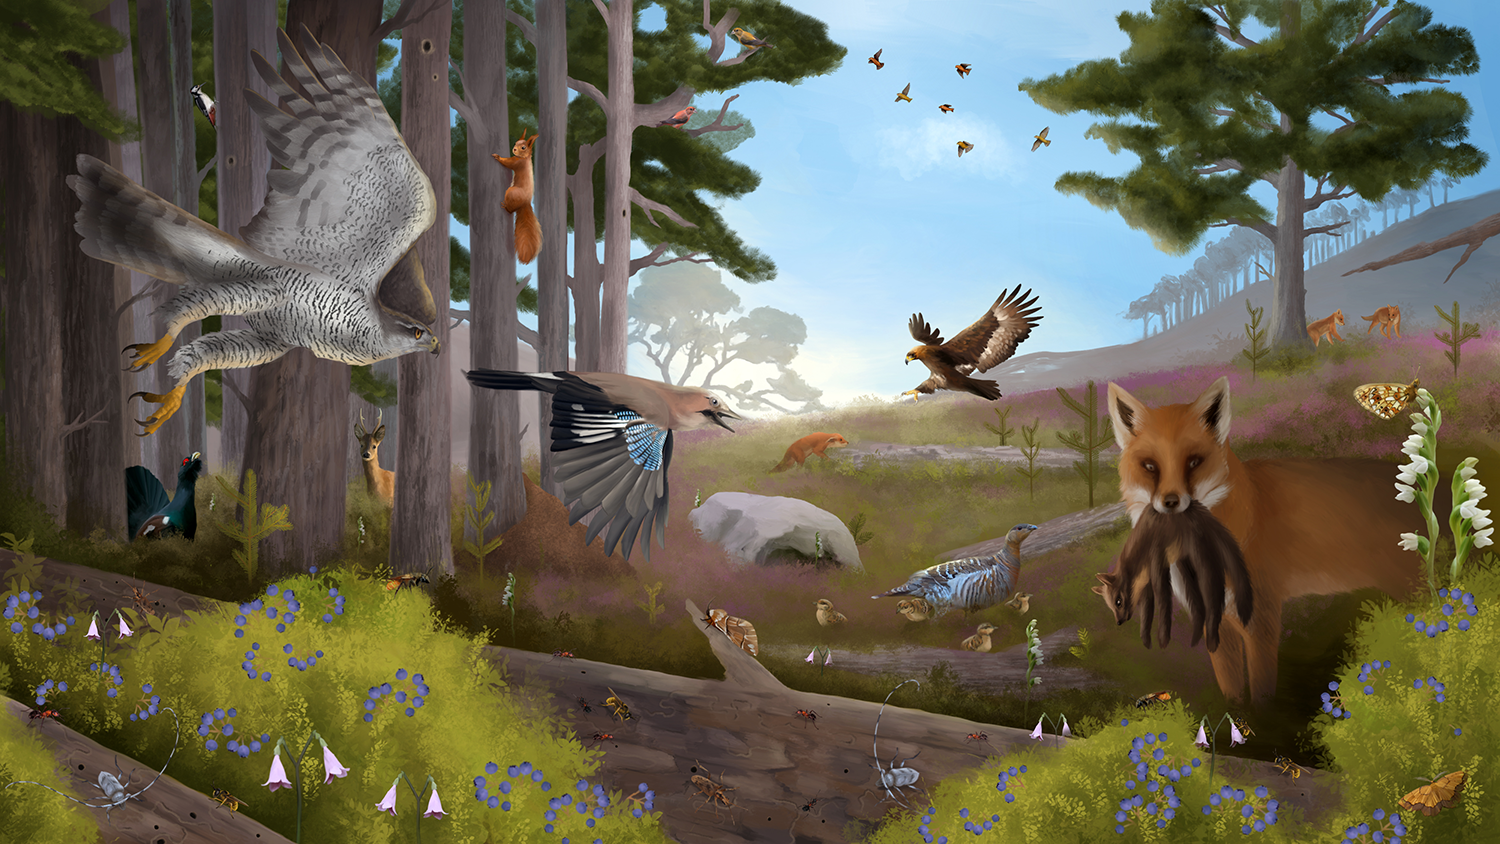 Illustration of diverse habitats and species